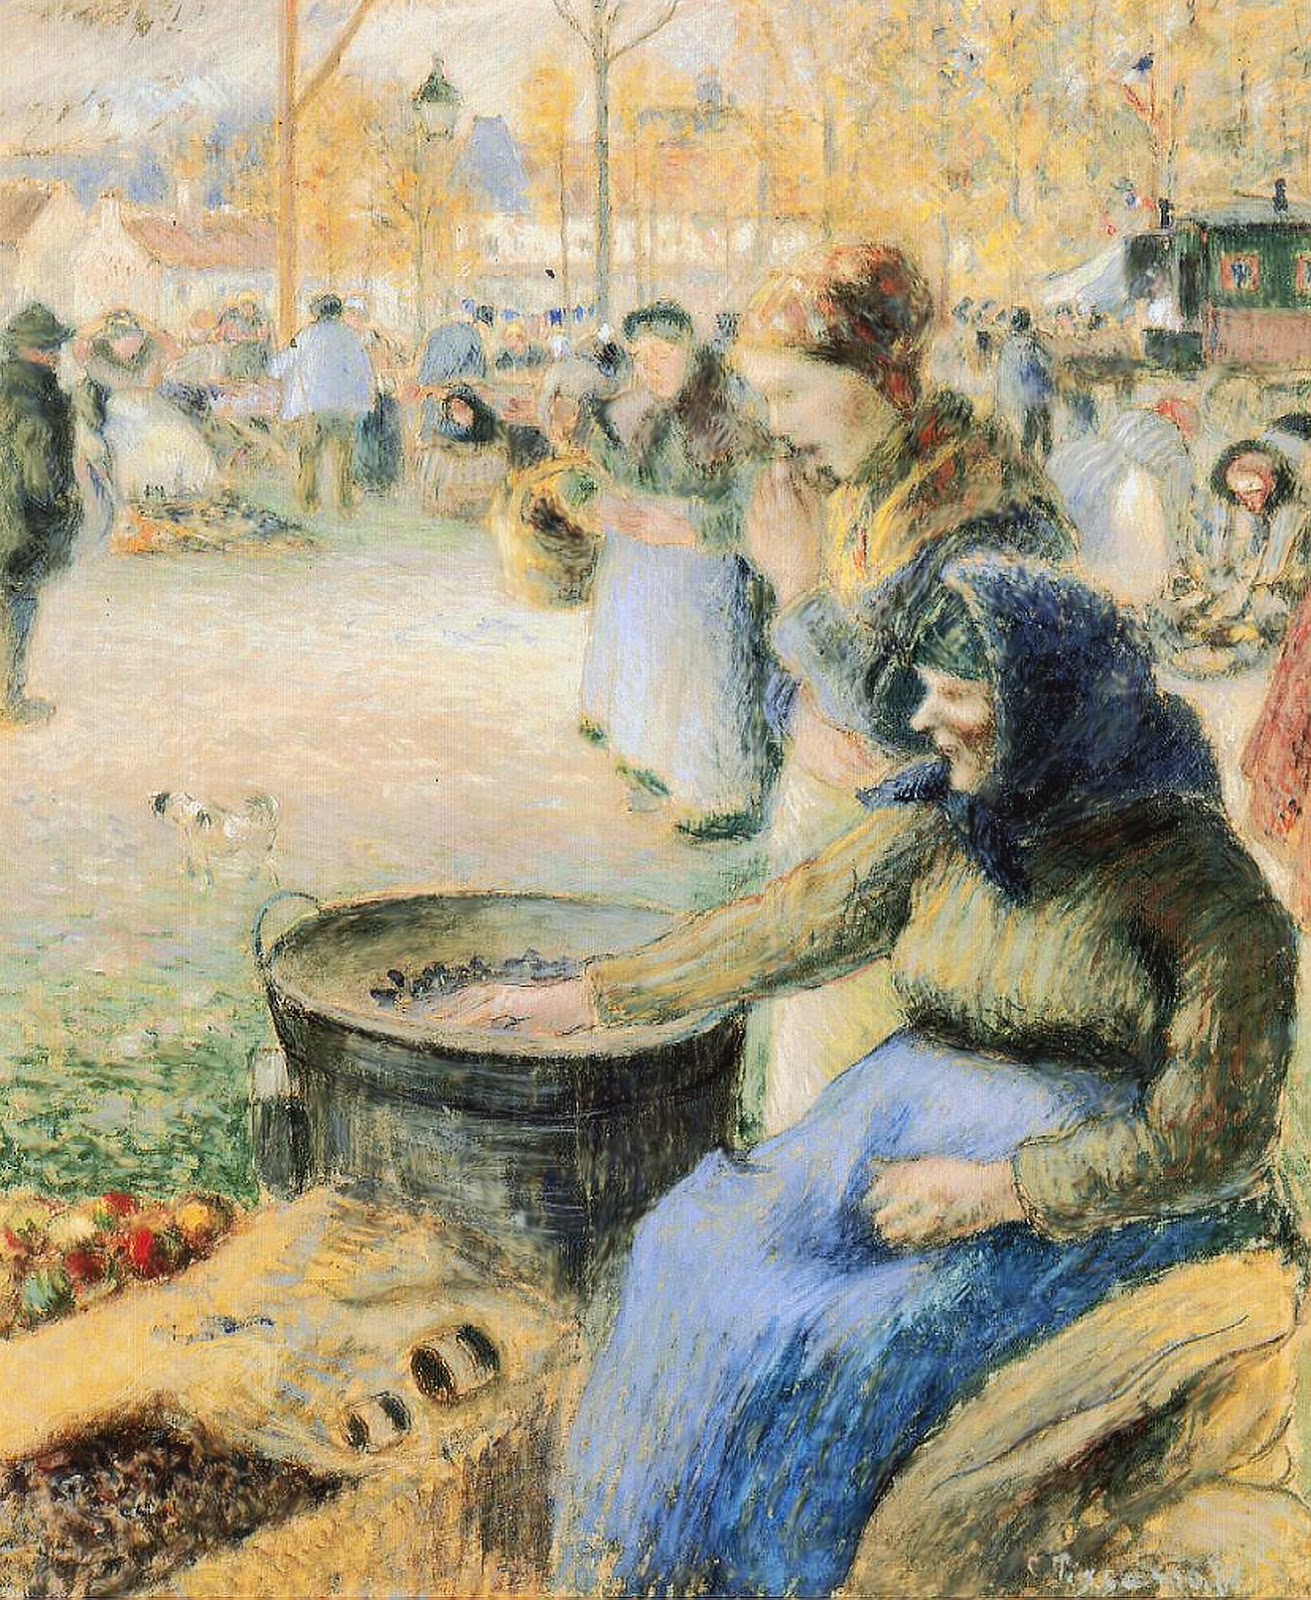 Camille+Pissarro-1830-1903 (314).jpg